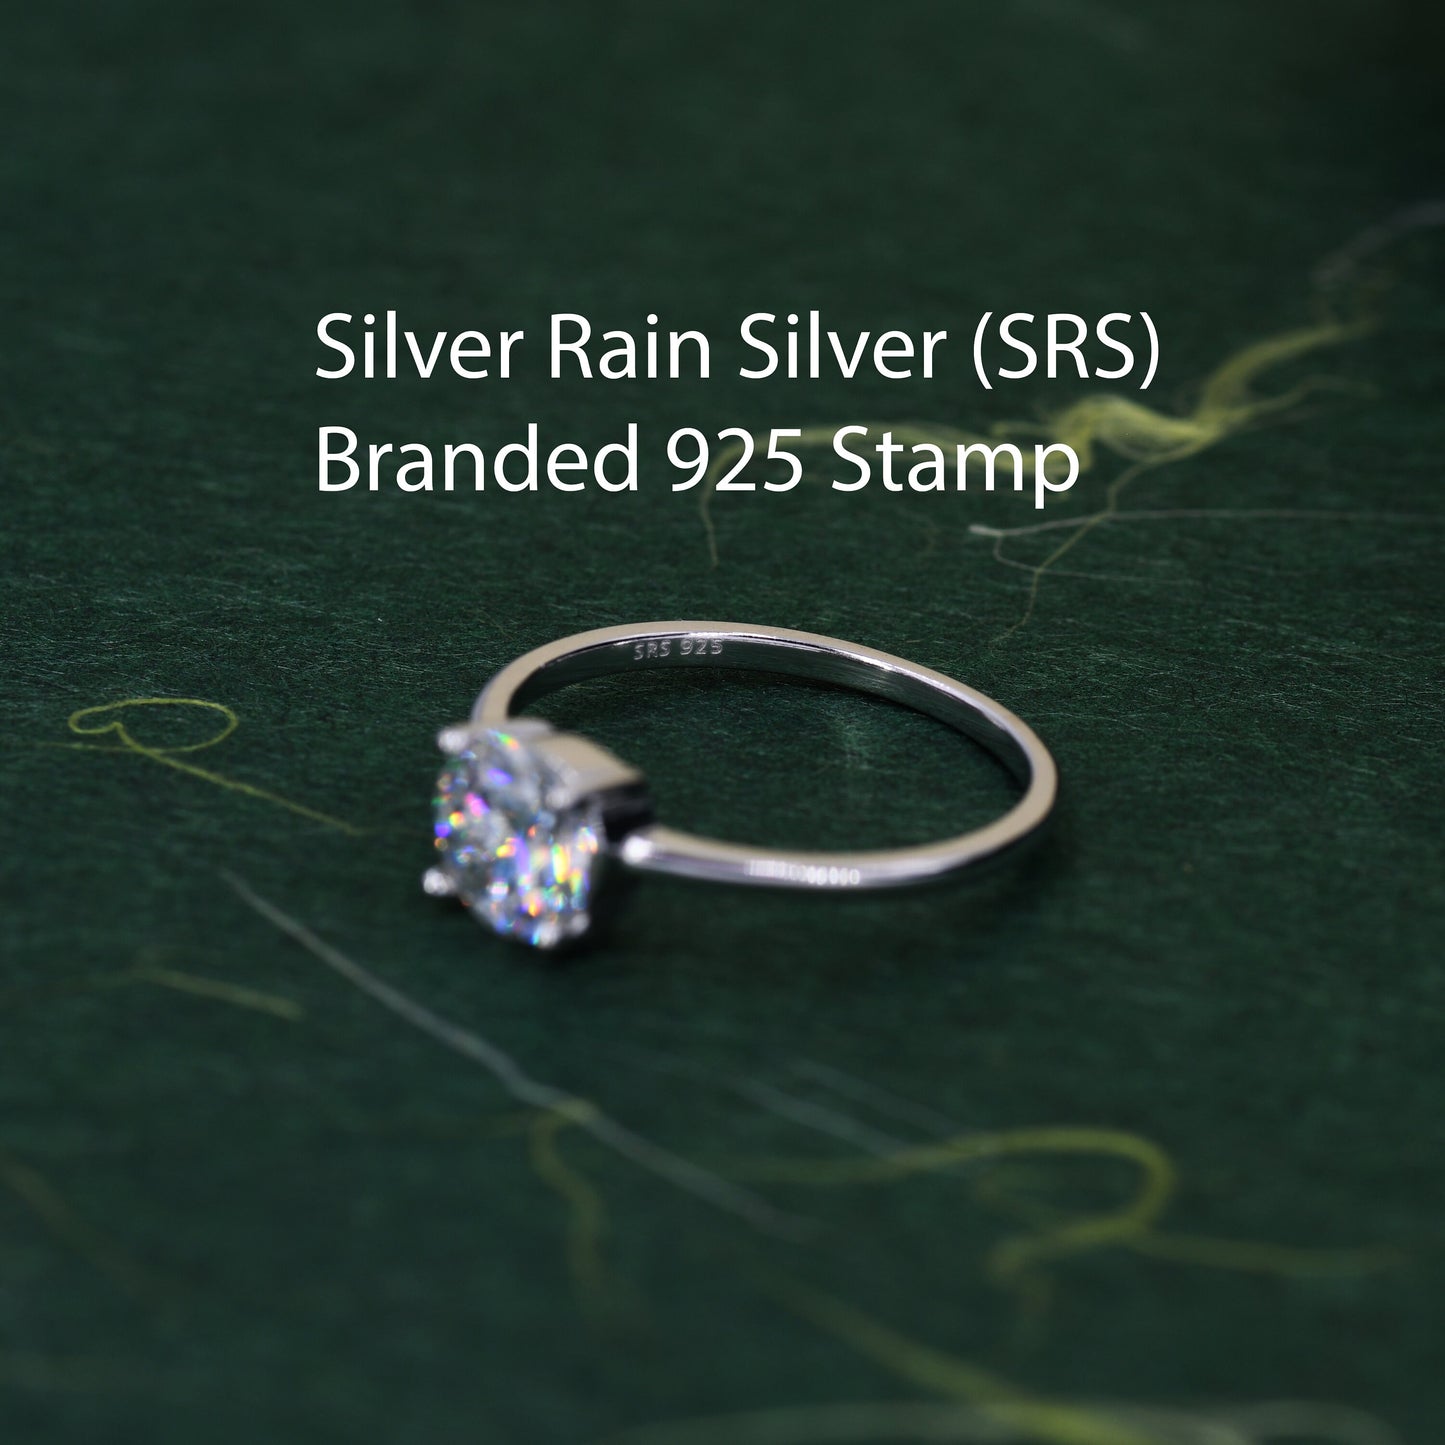 0.8 Carat Moissanite Diamond Classic Single Stone Engagement Ring in Sterling Silver, Genuine Moissanite Diamond, US 5-8